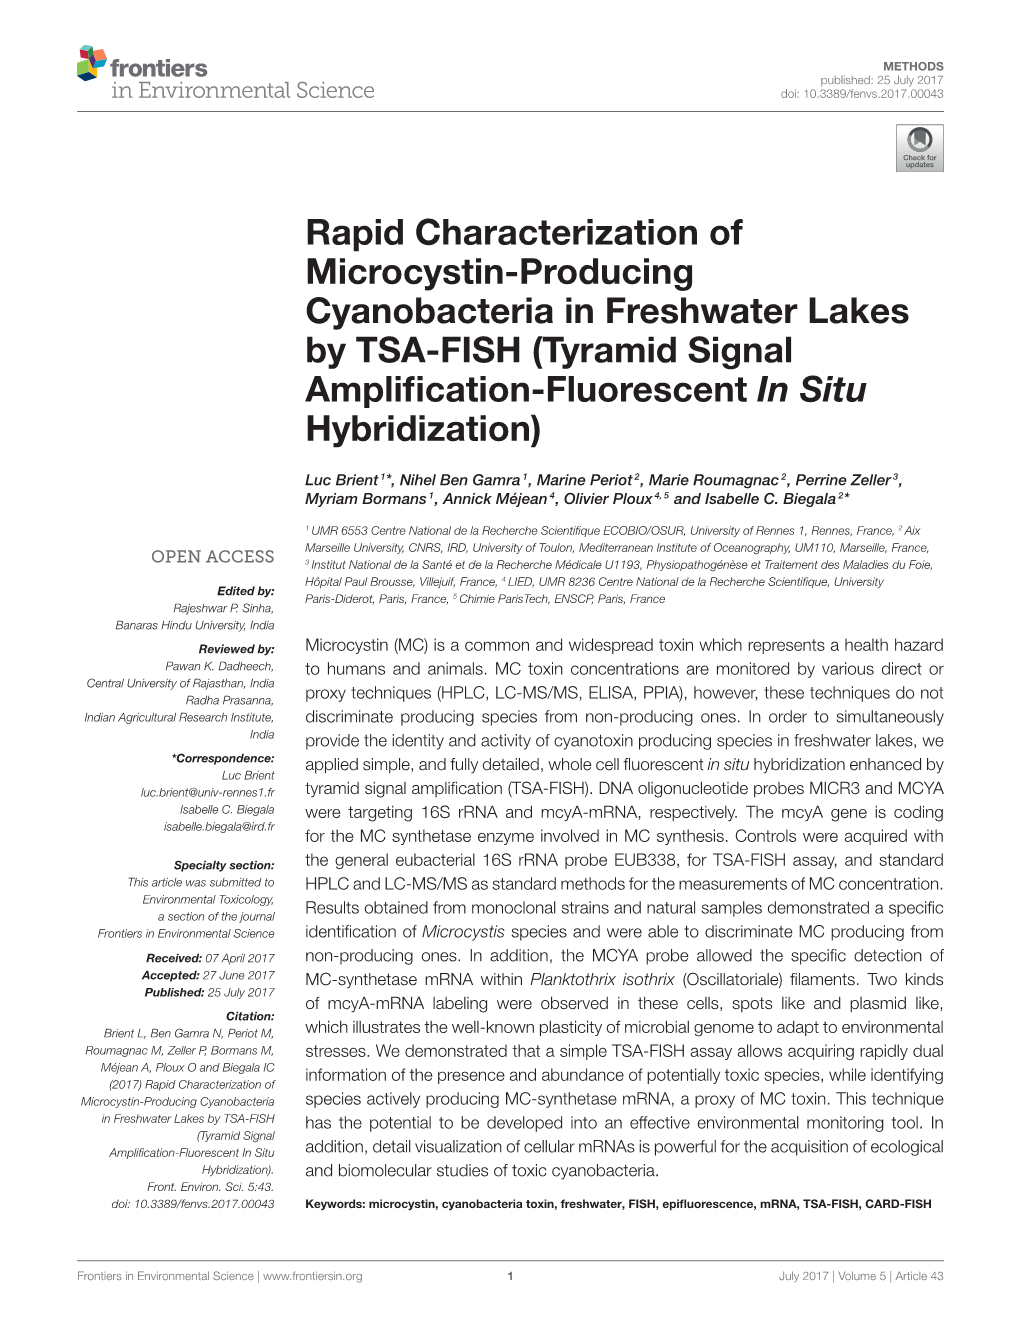 Rapid Characterization of Microcystin-Producing Cyanobacteria in Freshwaterlakes by TSA-FISH